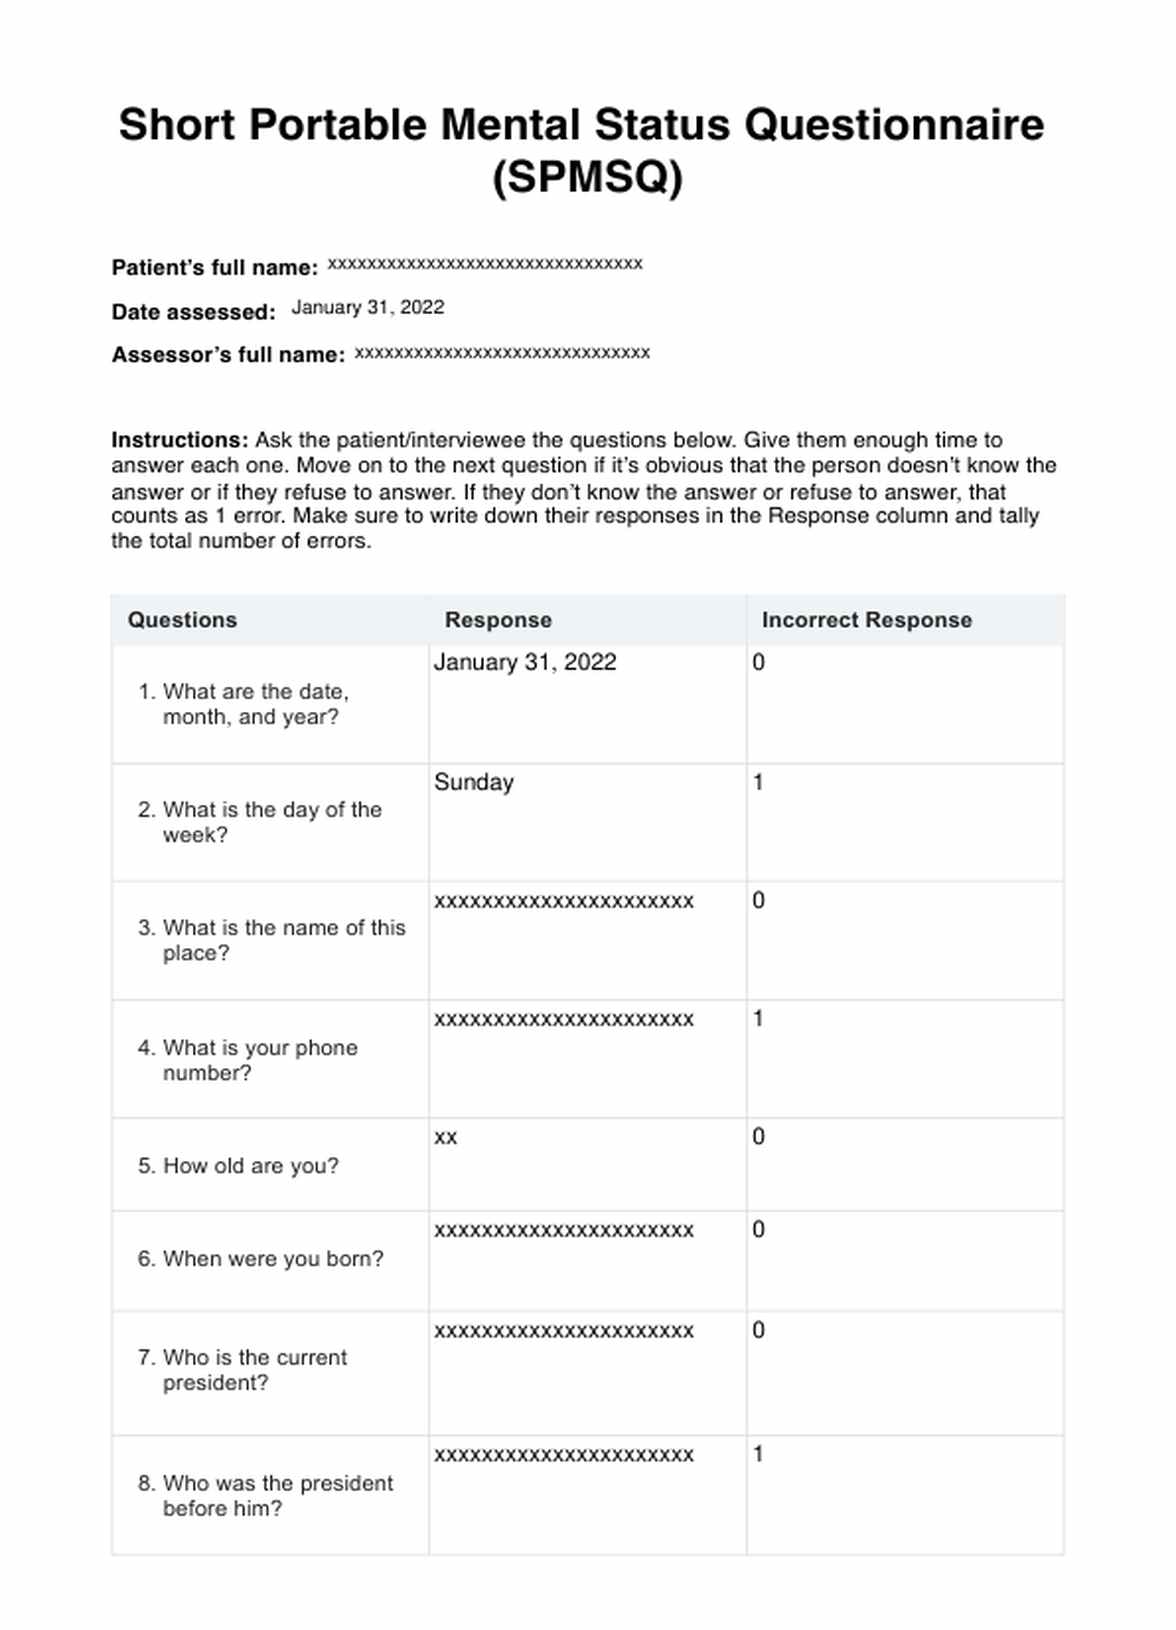 Short Portable Mental Status Questionnaire (SPMSQ) PDF Example